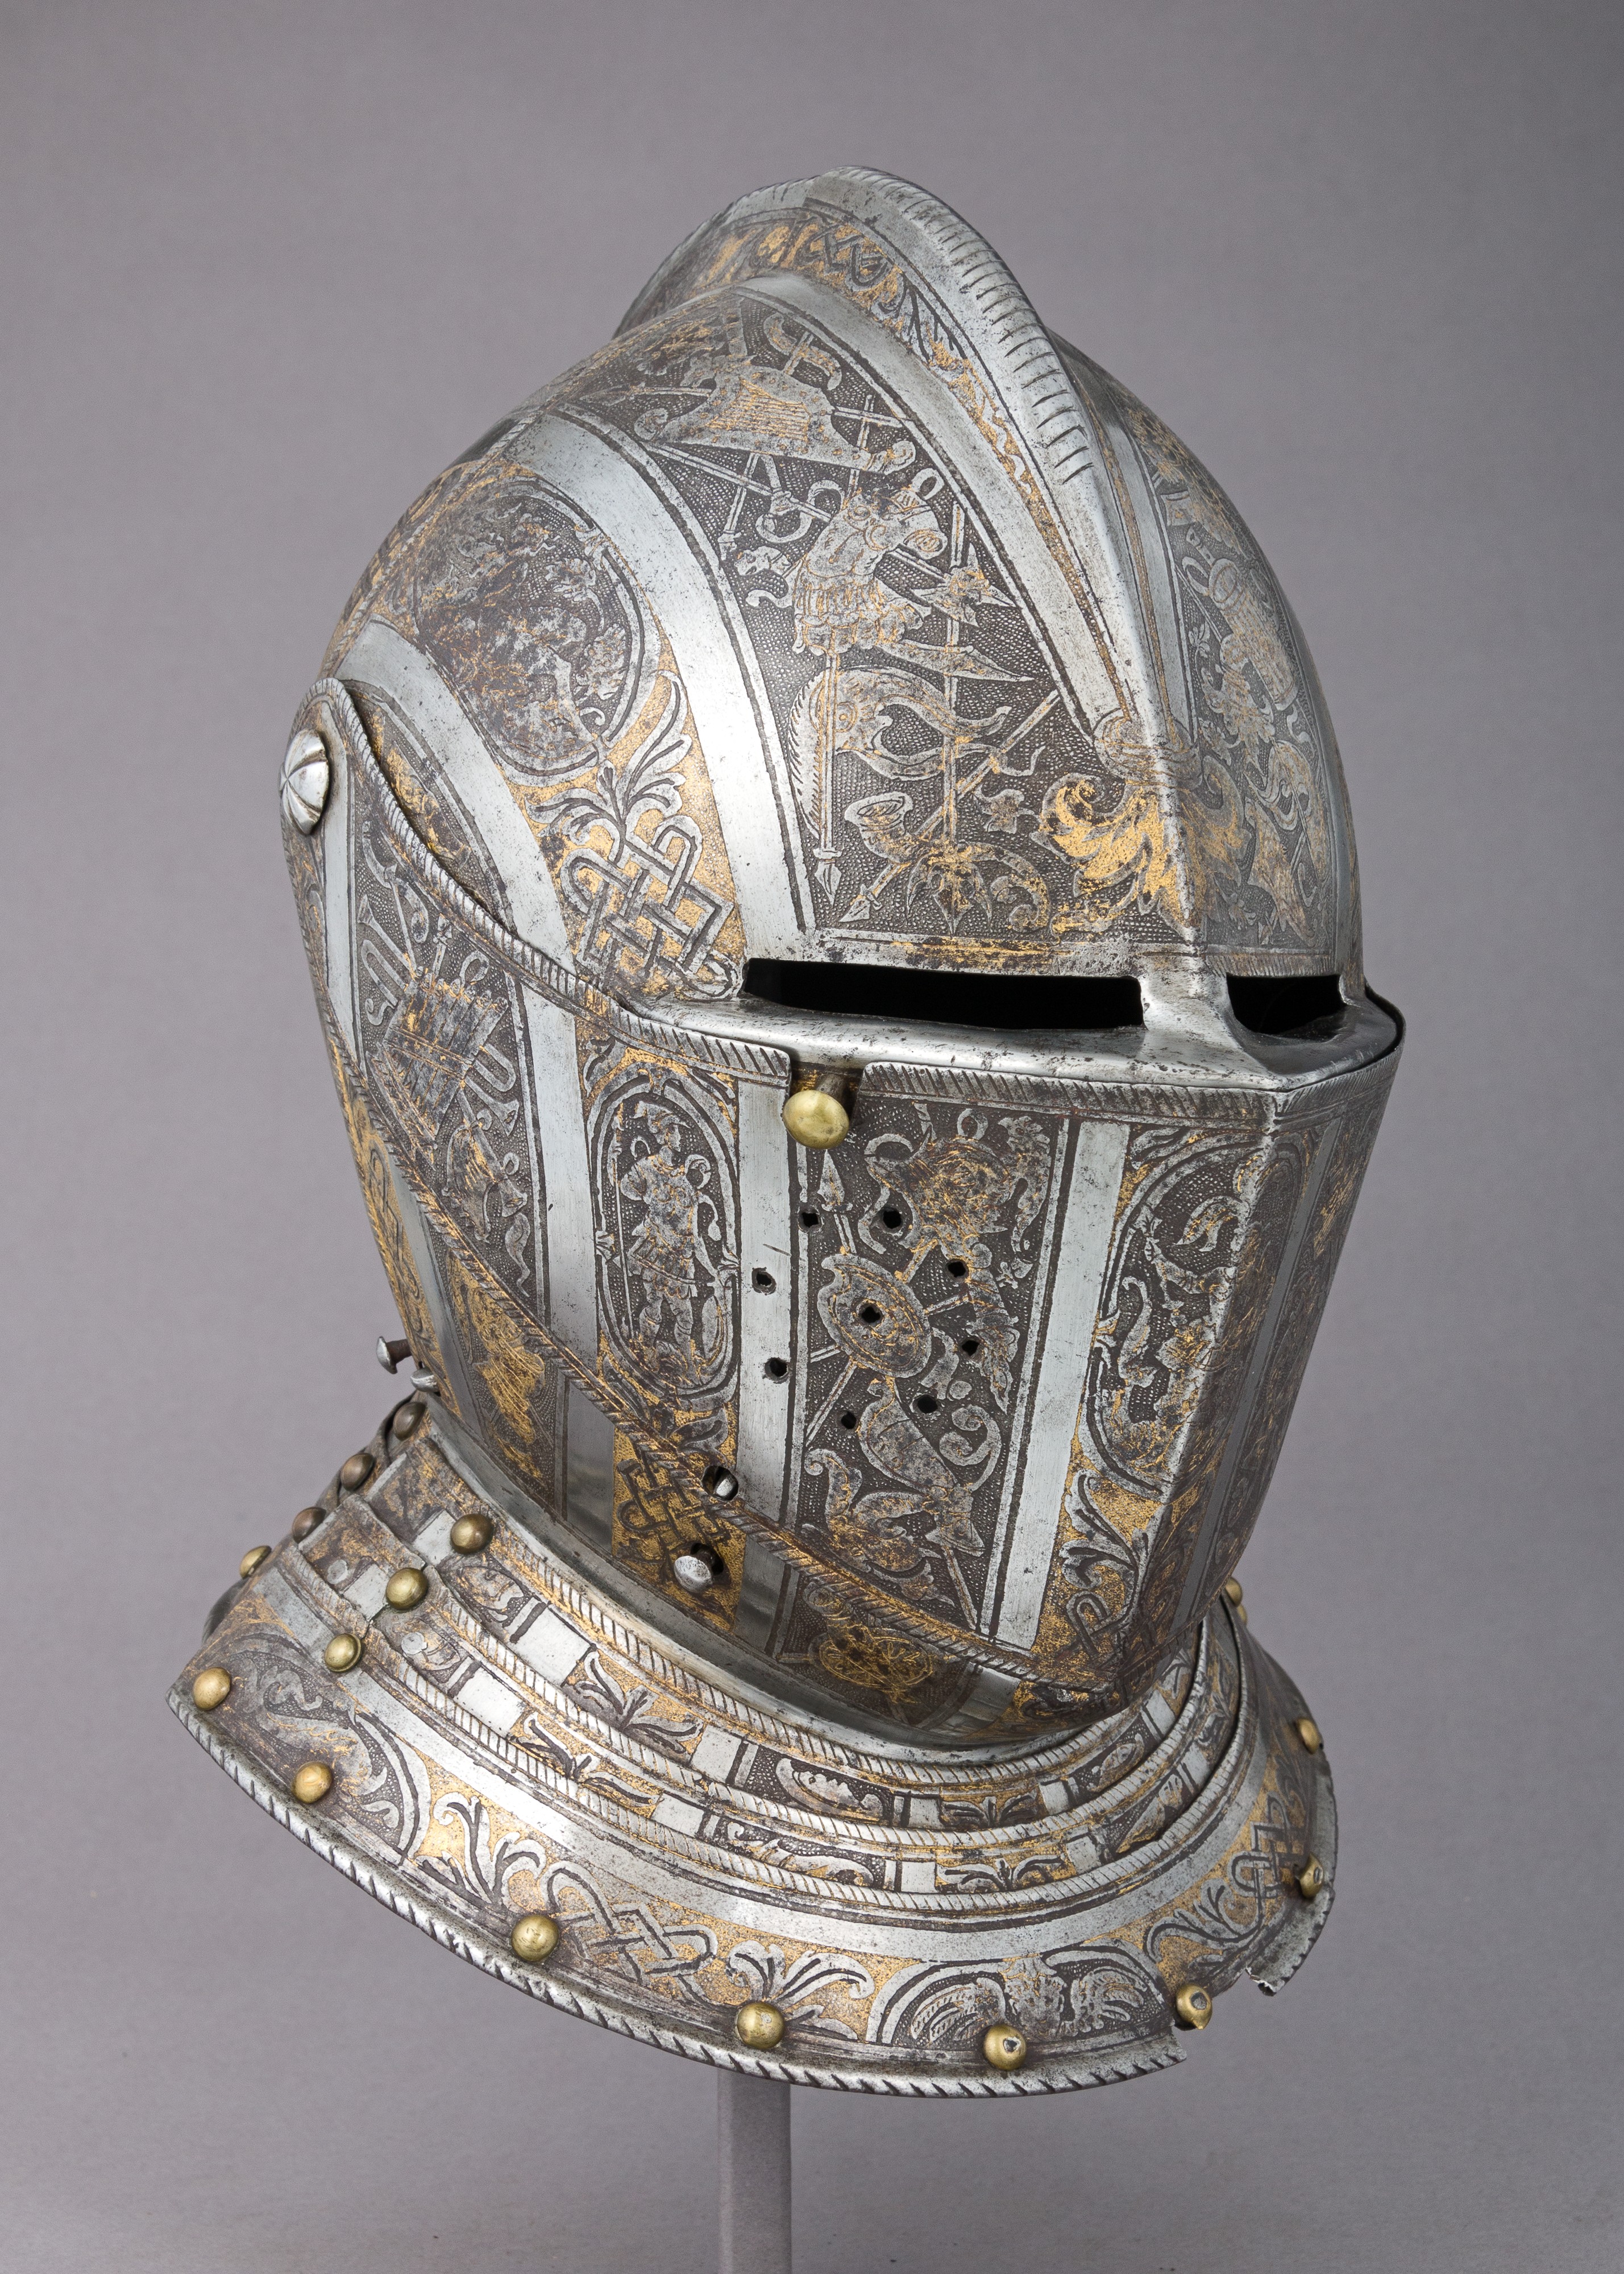 Armor Armet Knight Engraving European Museum Portrait Display 2857x4000